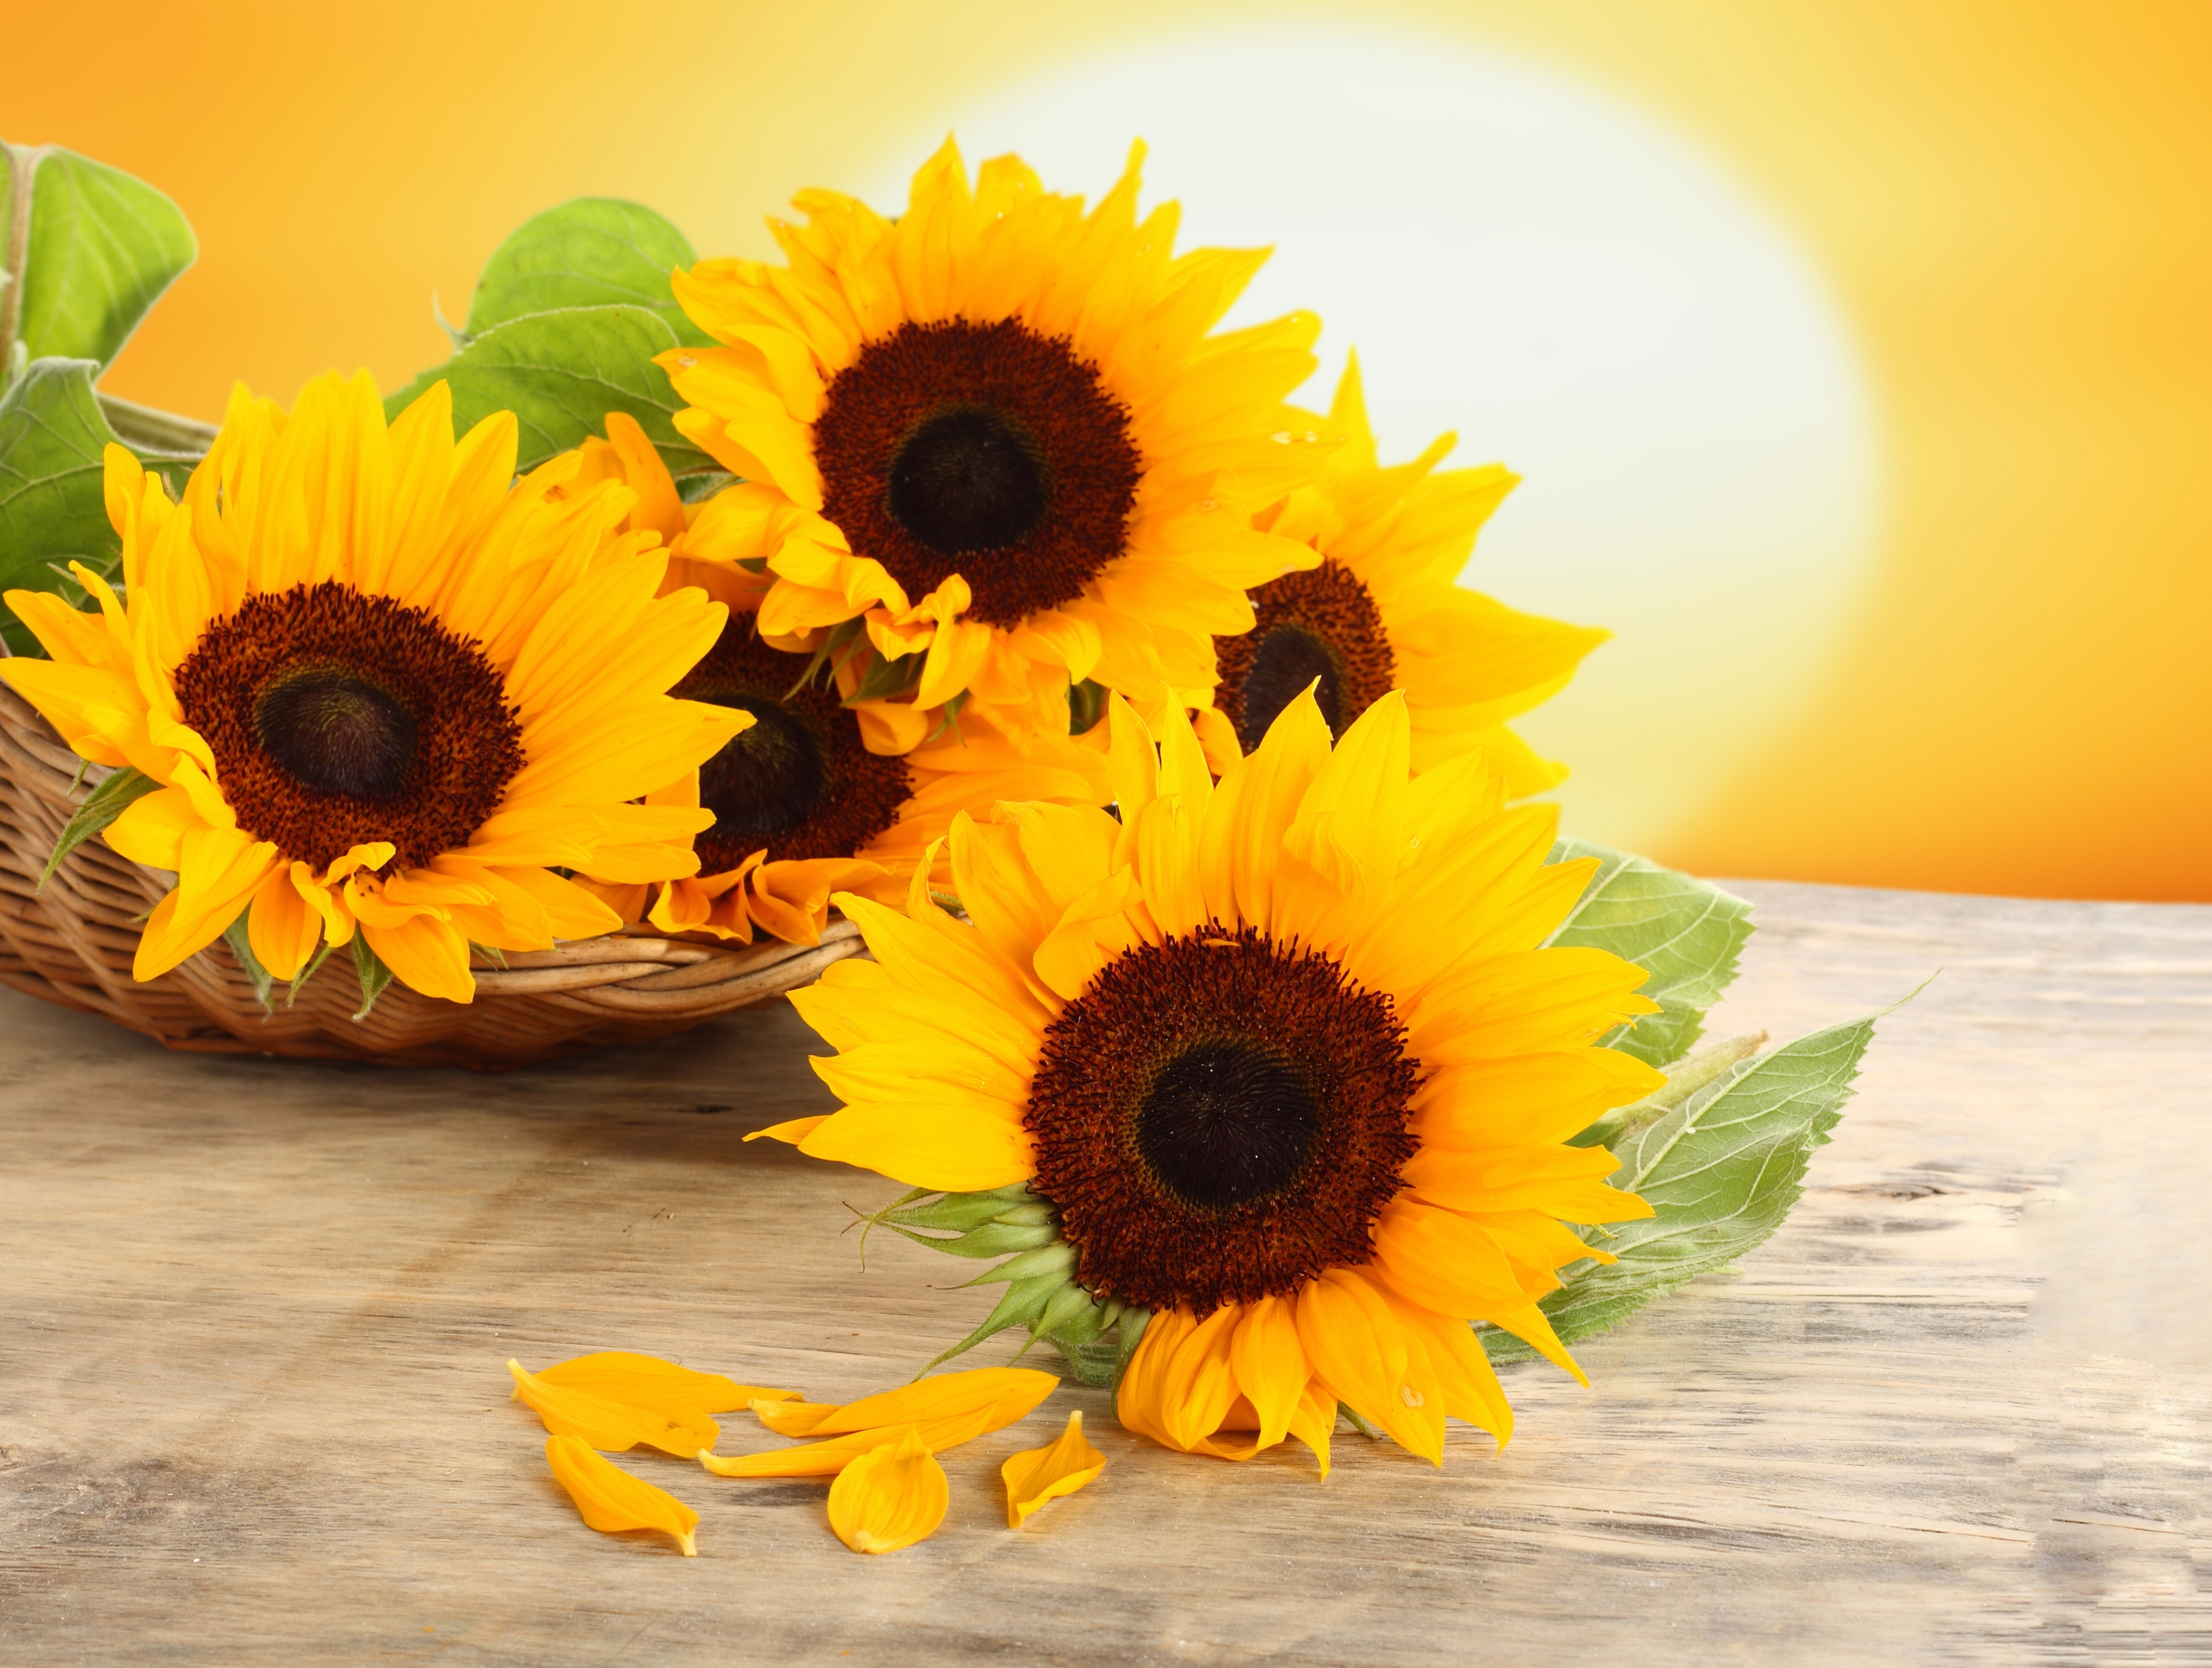 Wallpaper sunflowers flowers yellow petals basket table